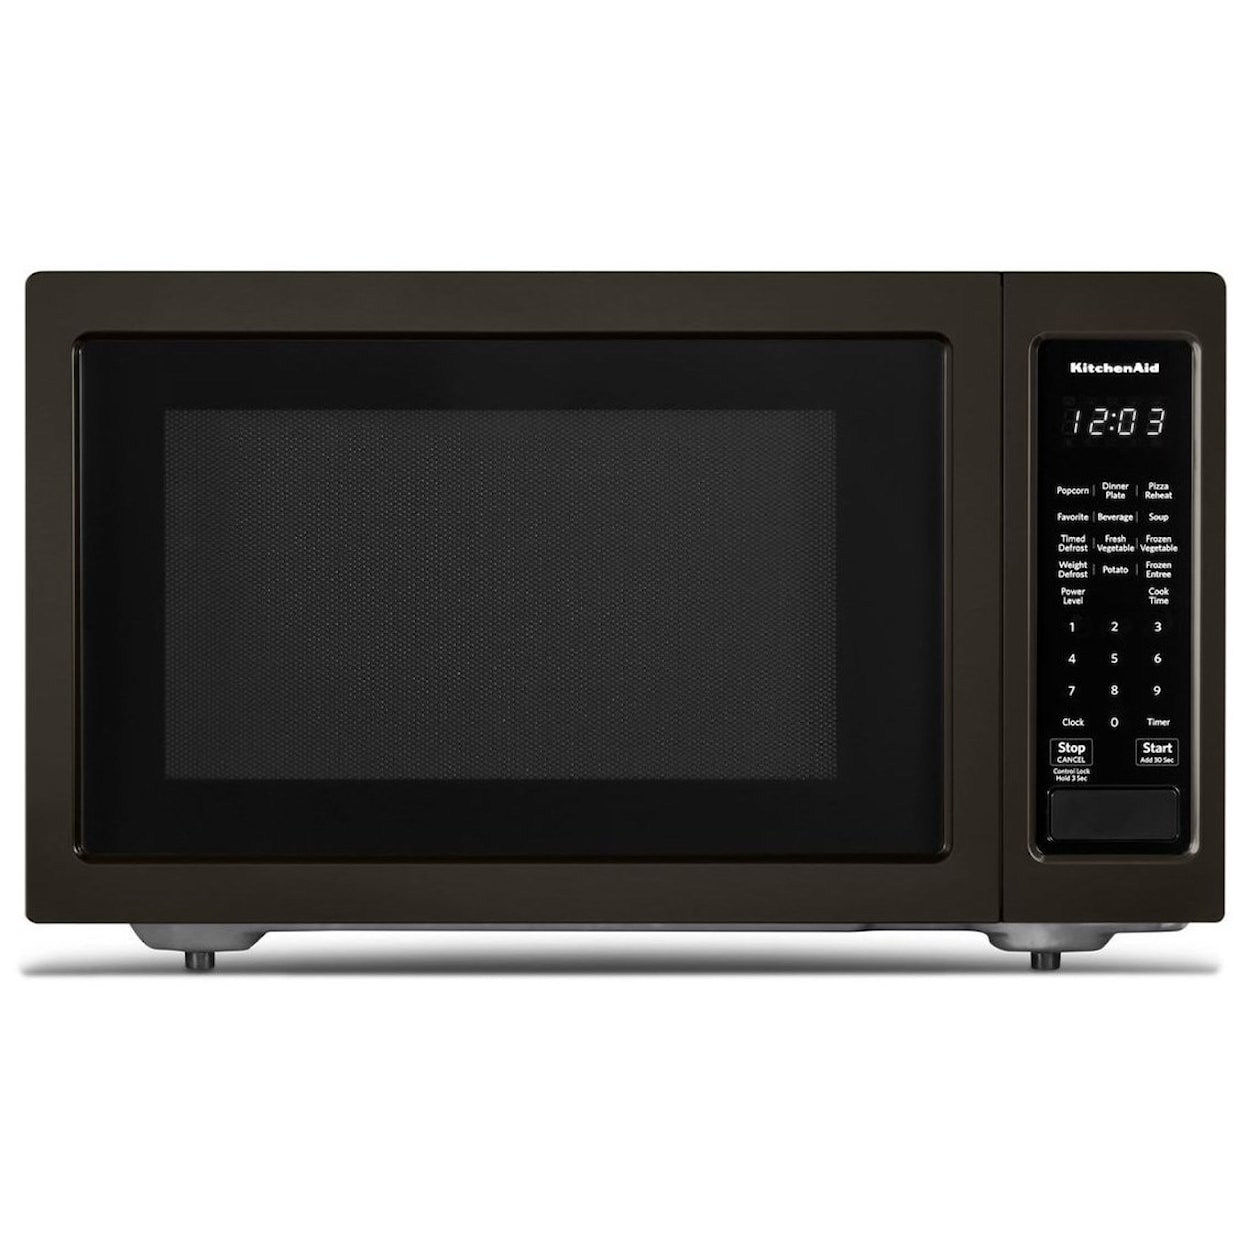 KitchenAid Microwaves - Kitchenaid 21 3/4" Countertop Microwave Oven - 1200W